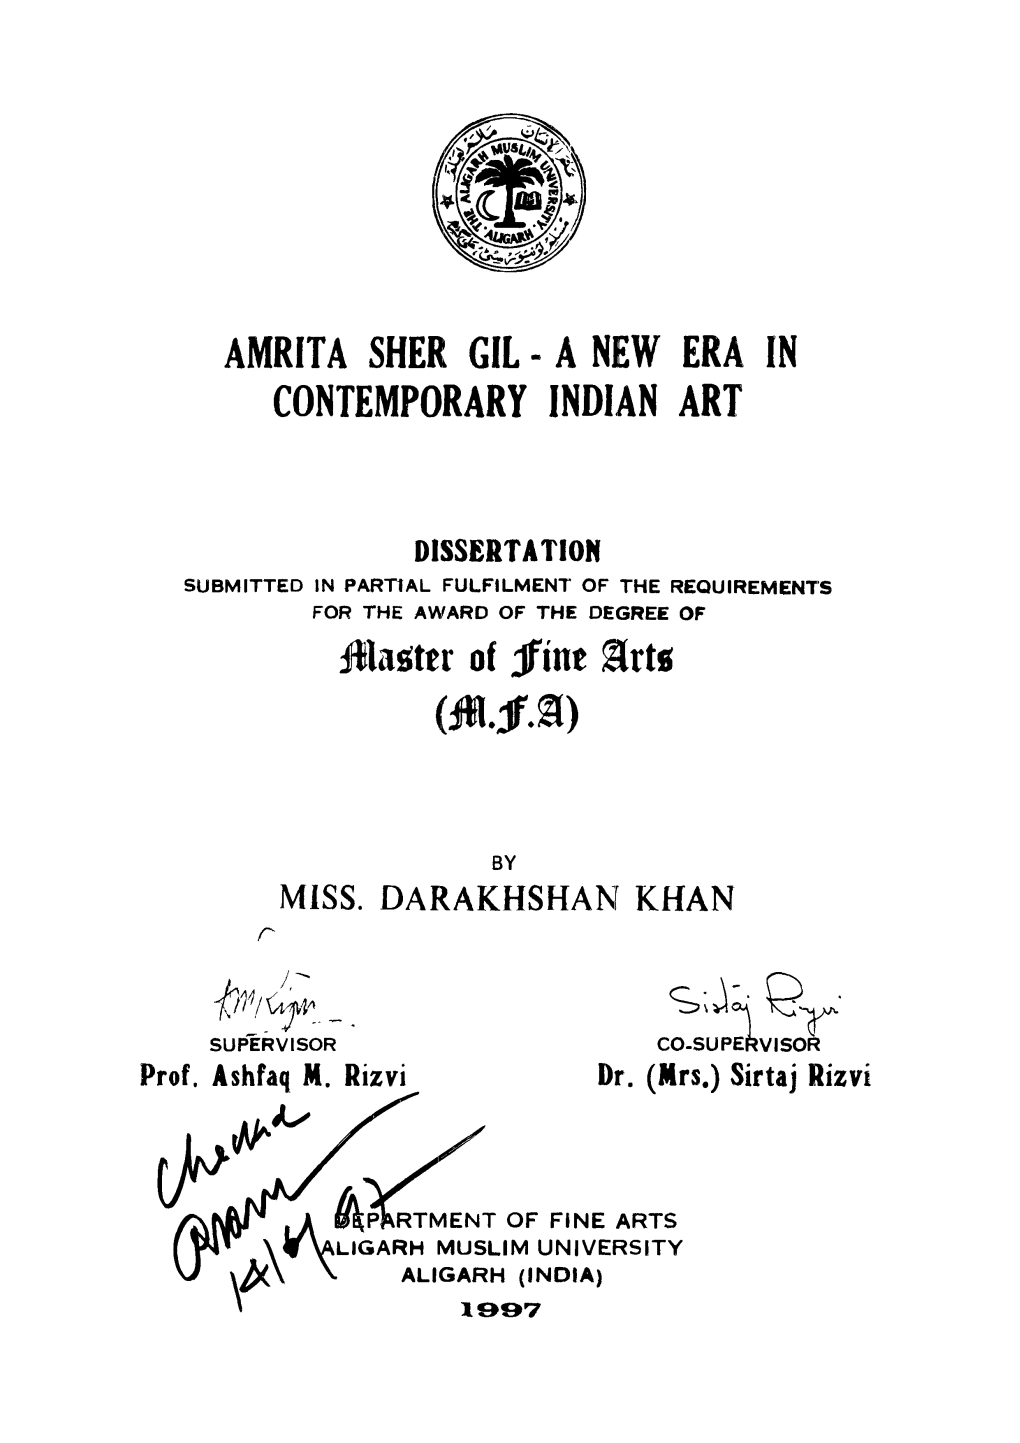 Amrita Sher Gil - a New Era in Contemporary Indian Art